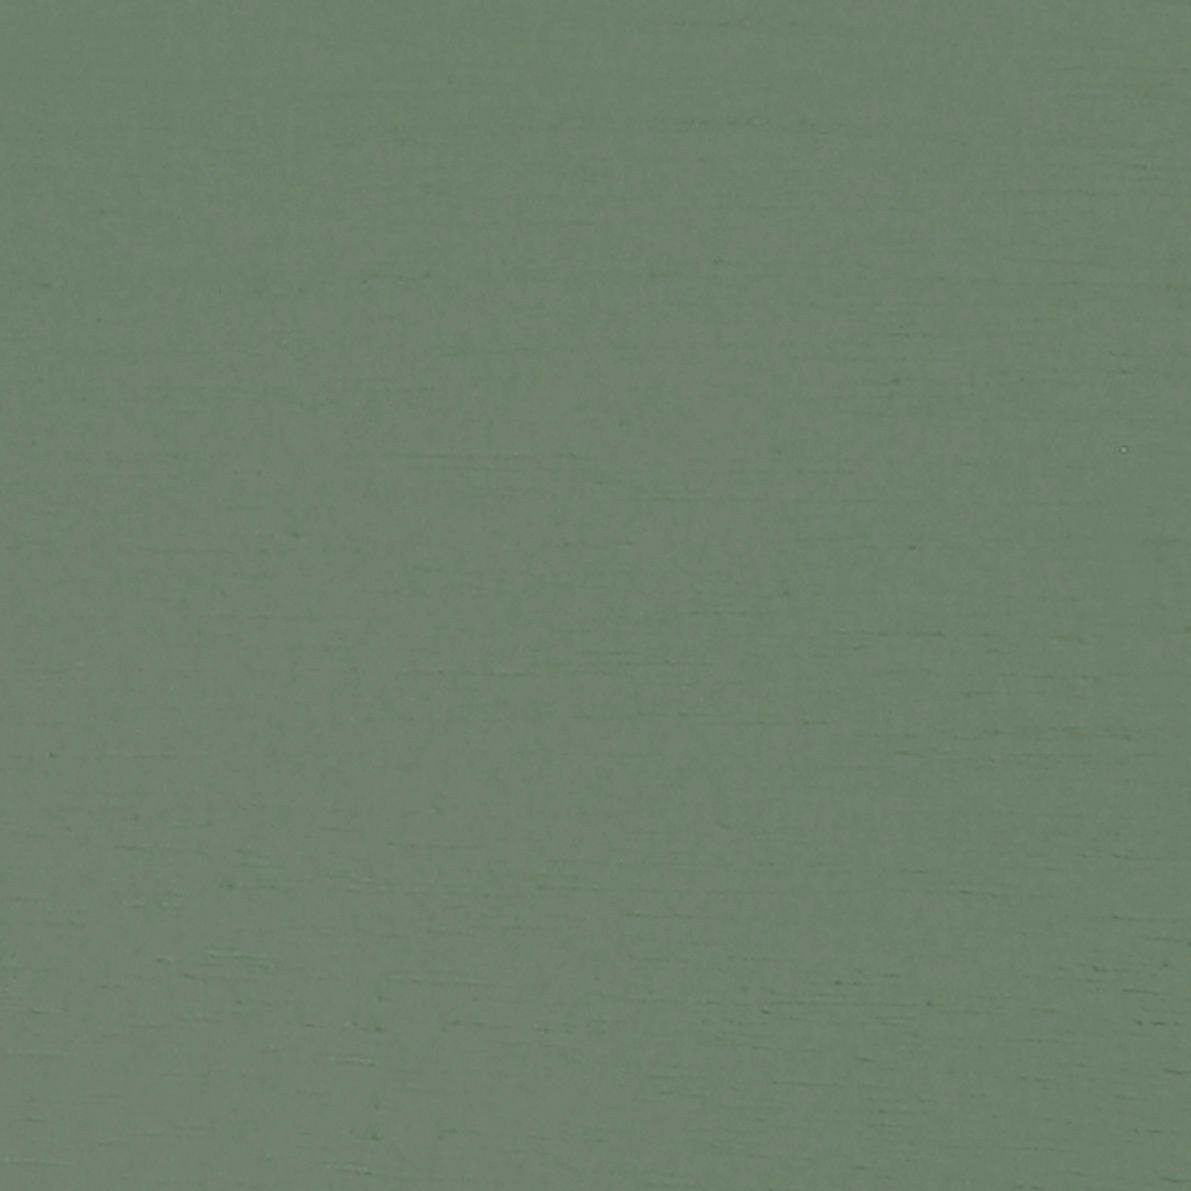 Baufix Acryl-Buntlack Shabby Vintage Lack, 0,75 Liter, grün Chc